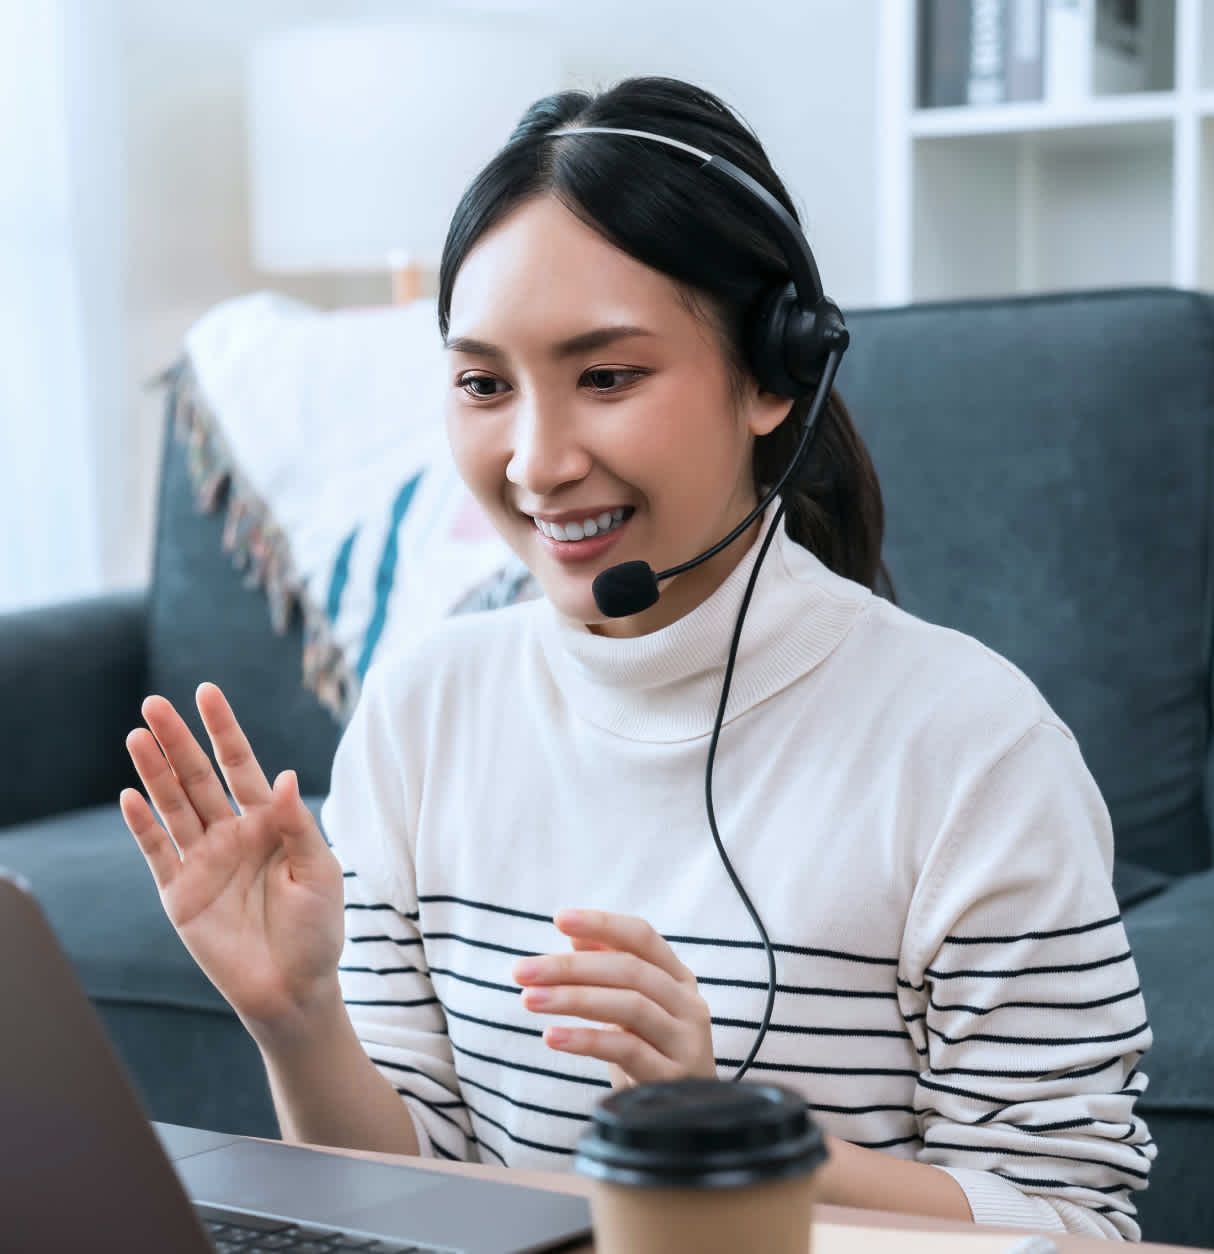 Customer service rep on video call